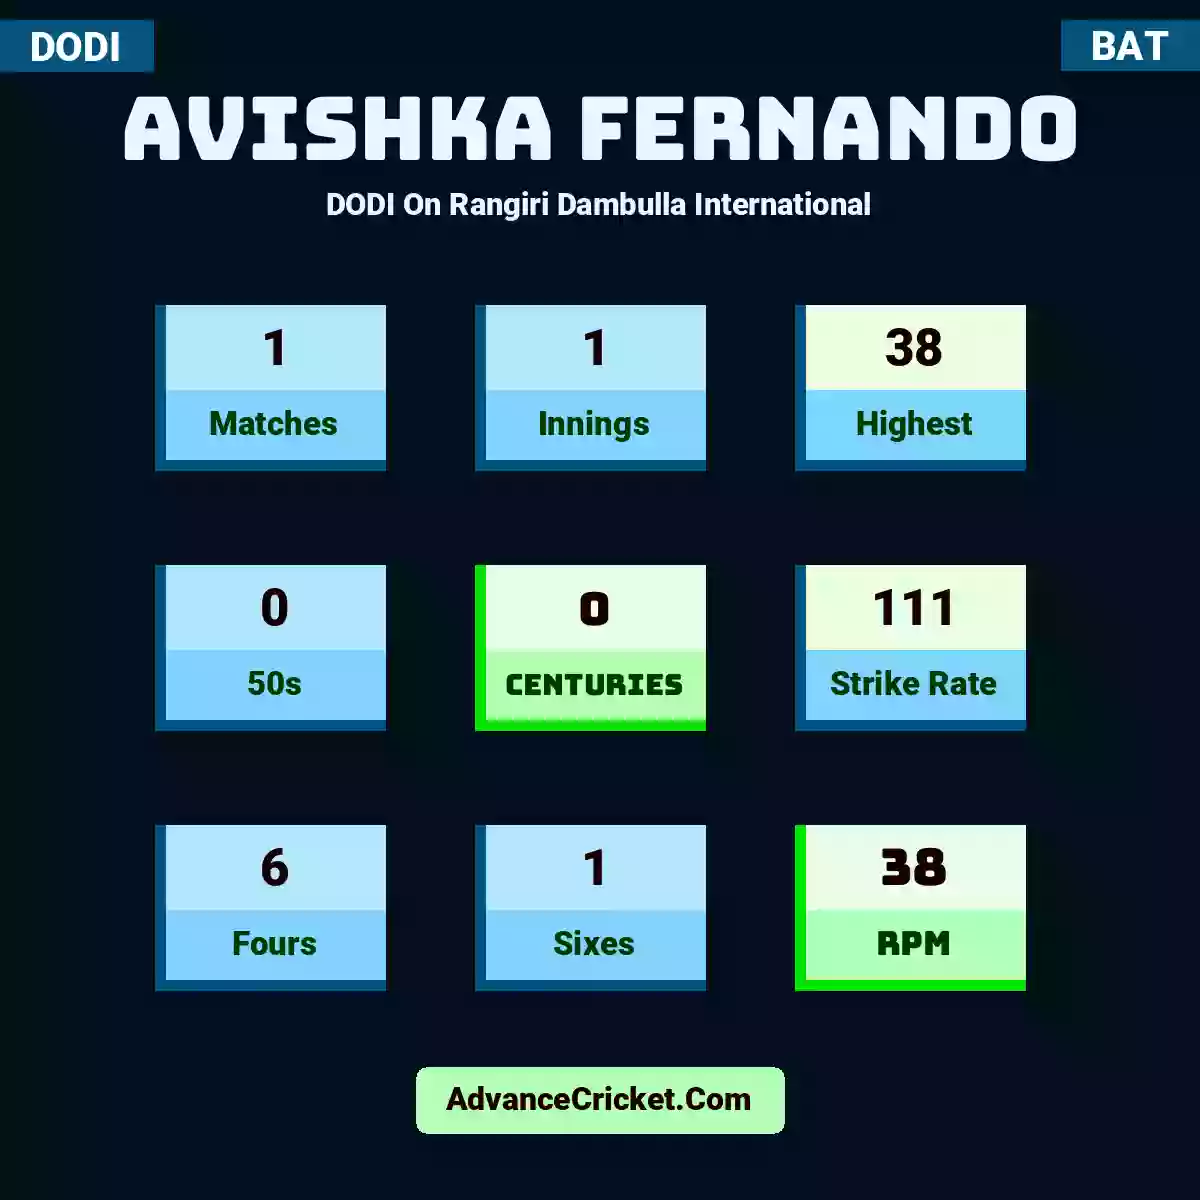 Avishka Fernando DODI  On Rangiri Dambulla International, Avishka Fernando played 1 matches, scored 38 runs as highest, 0 half-centuries, and 0 centuries, with a strike rate of 111. A.Fernando hit 6 fours and 1 sixes, with an RPM of 38.